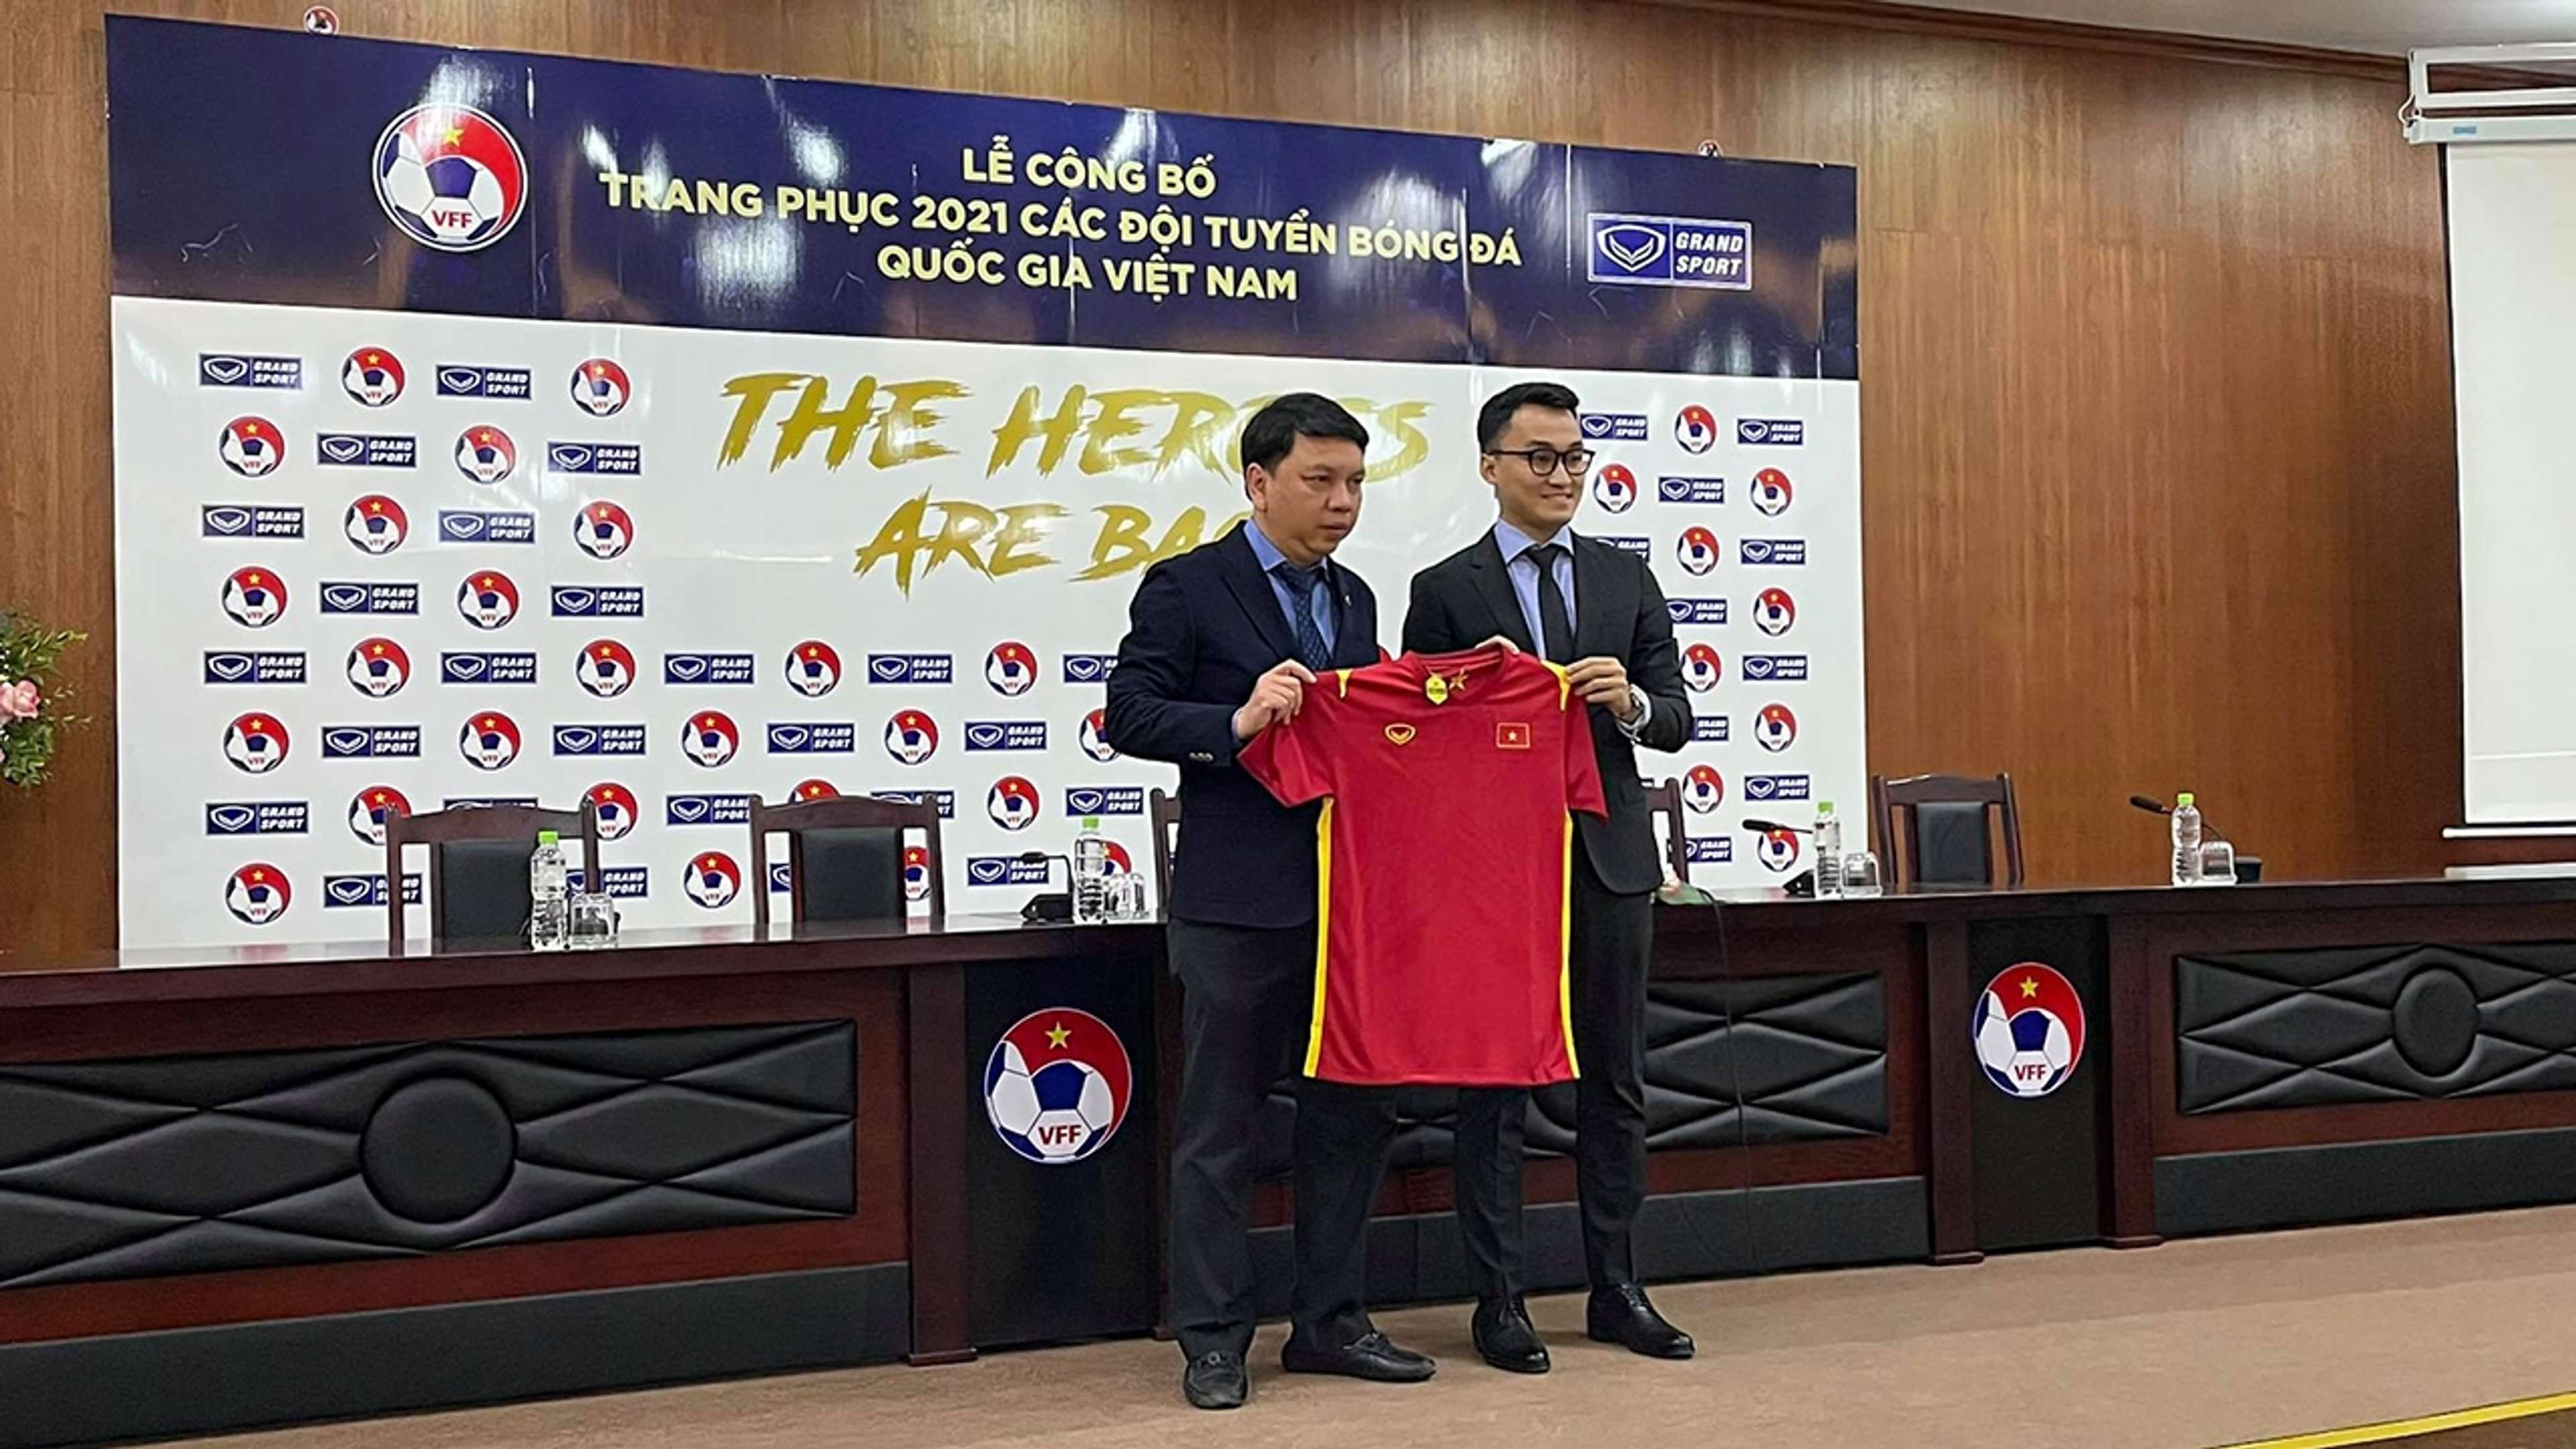 Le Hoai Anh Grand Sport Vietnam